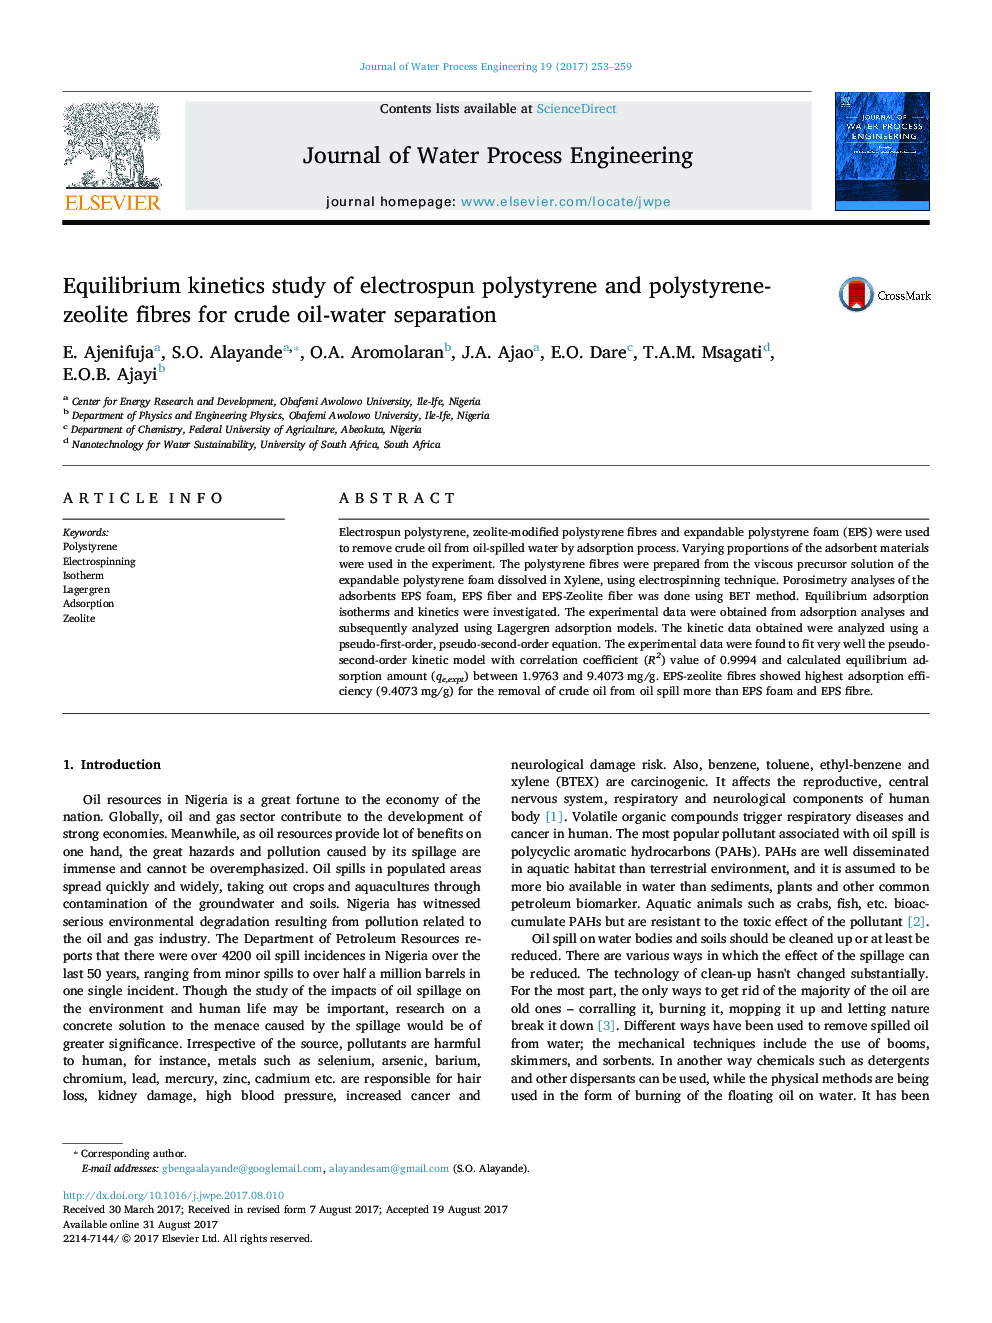 Equilibrium kinetics study of electrospun polystyrene and polystyrene-zeolite fibres for crude oil-water separation